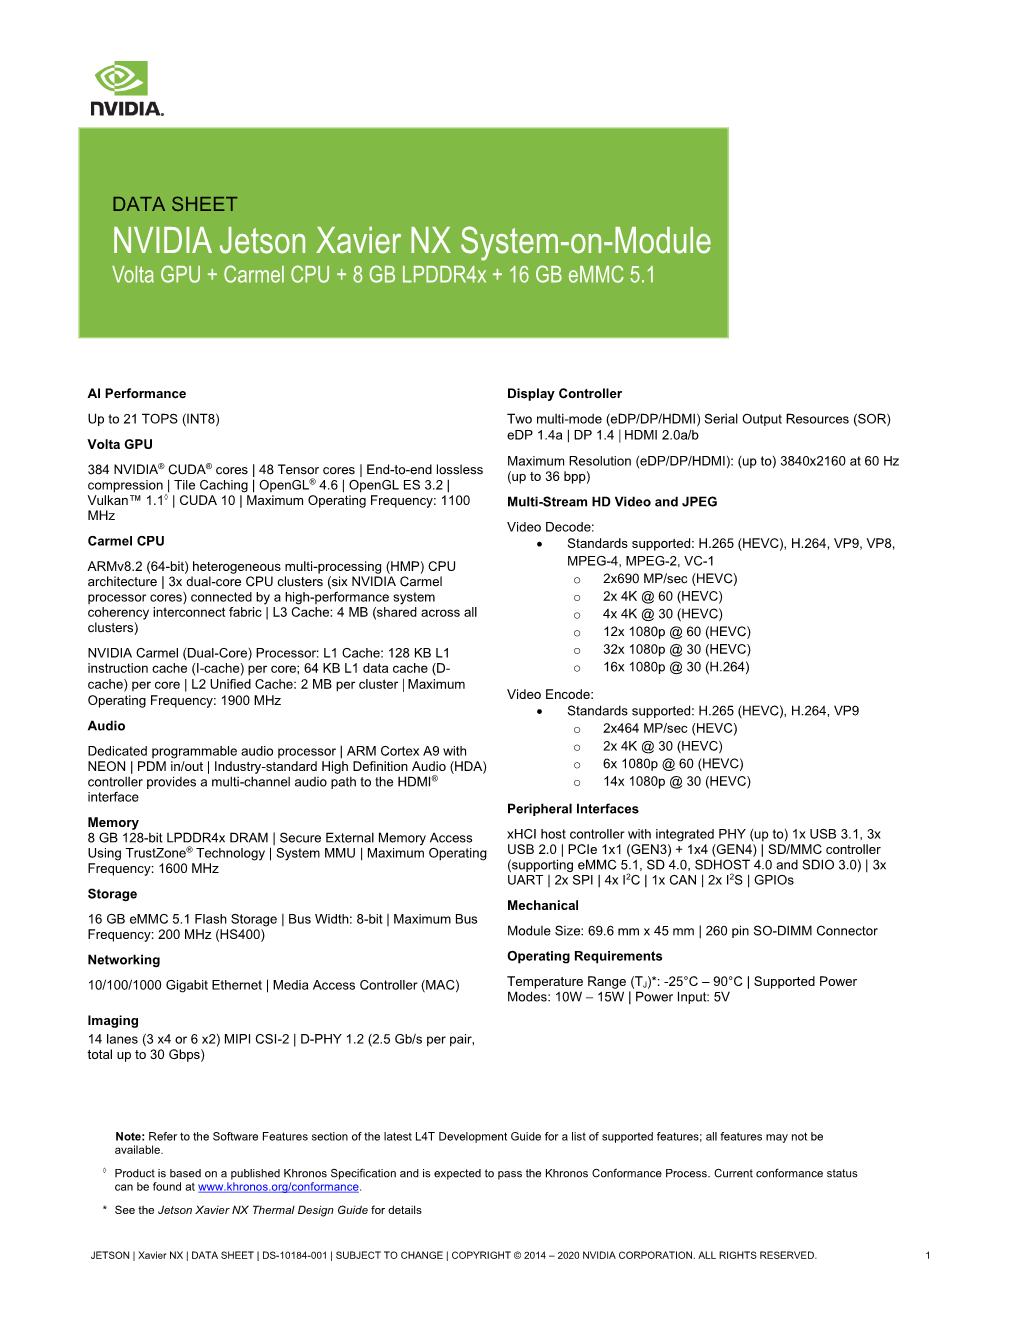 NVIDIA Jetson Xavier NX System-On-Module Volta GPU + Carmel CPU + 8 GB Lpddr4x + 16 GB Emmc 5.1